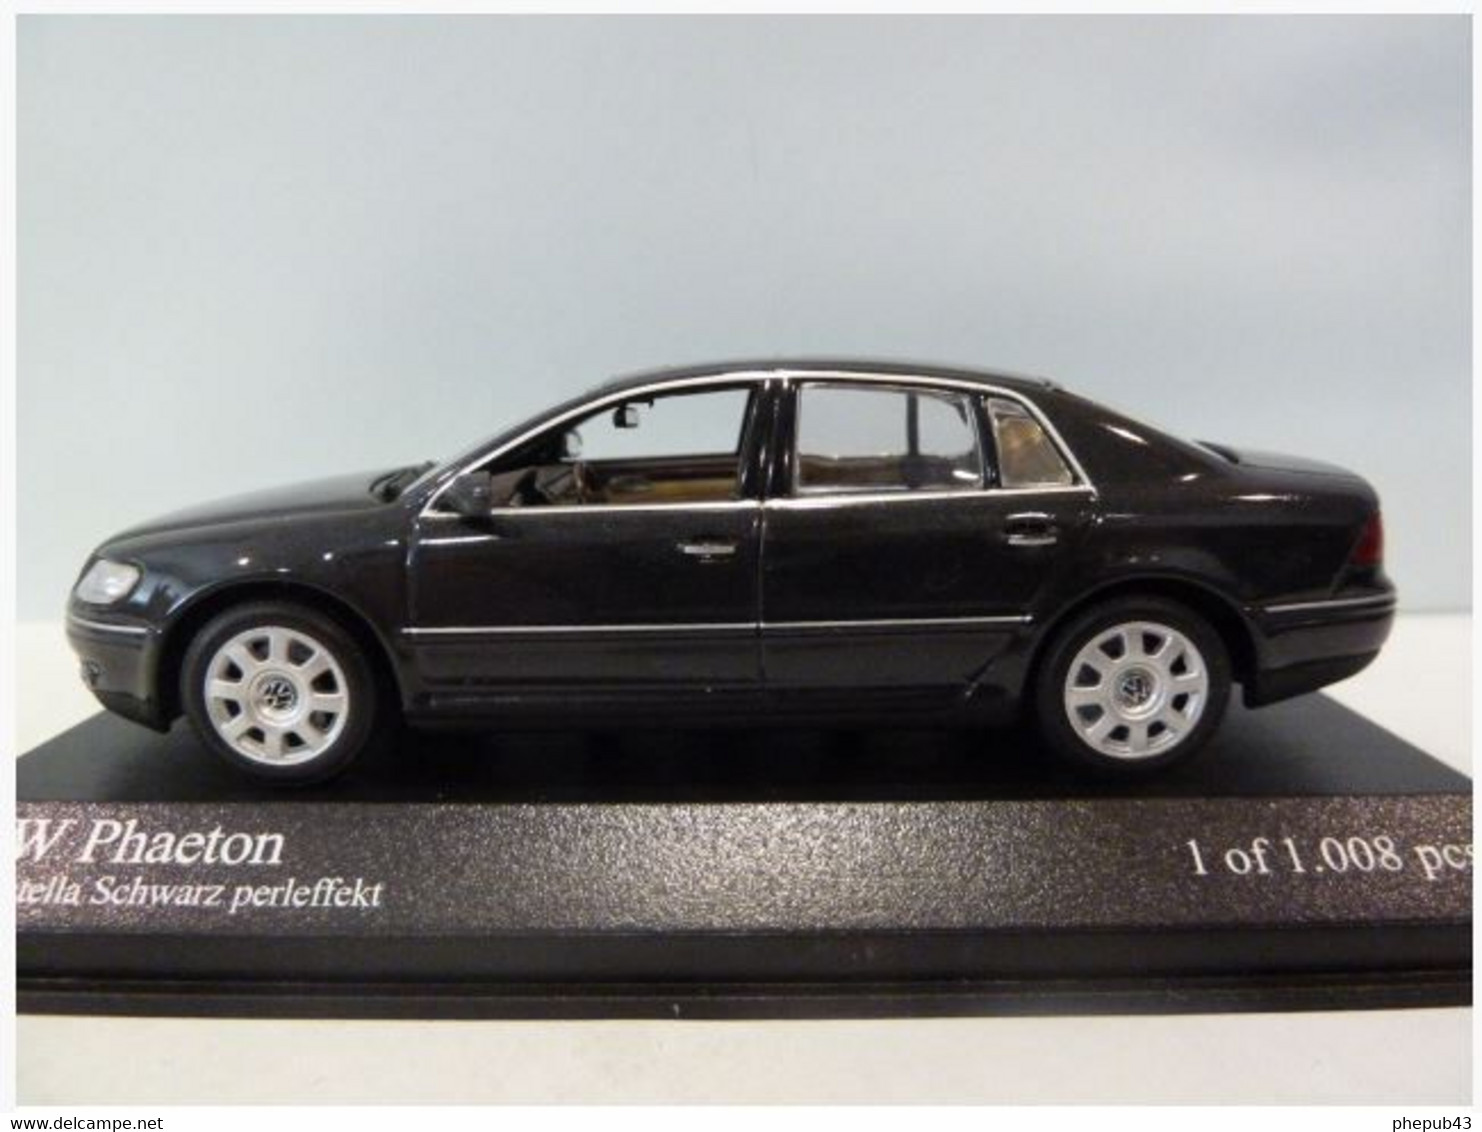 Volkswagen Phaeton - 2002 - Taranella Black Pearleffect - Minichamps - Minichamps